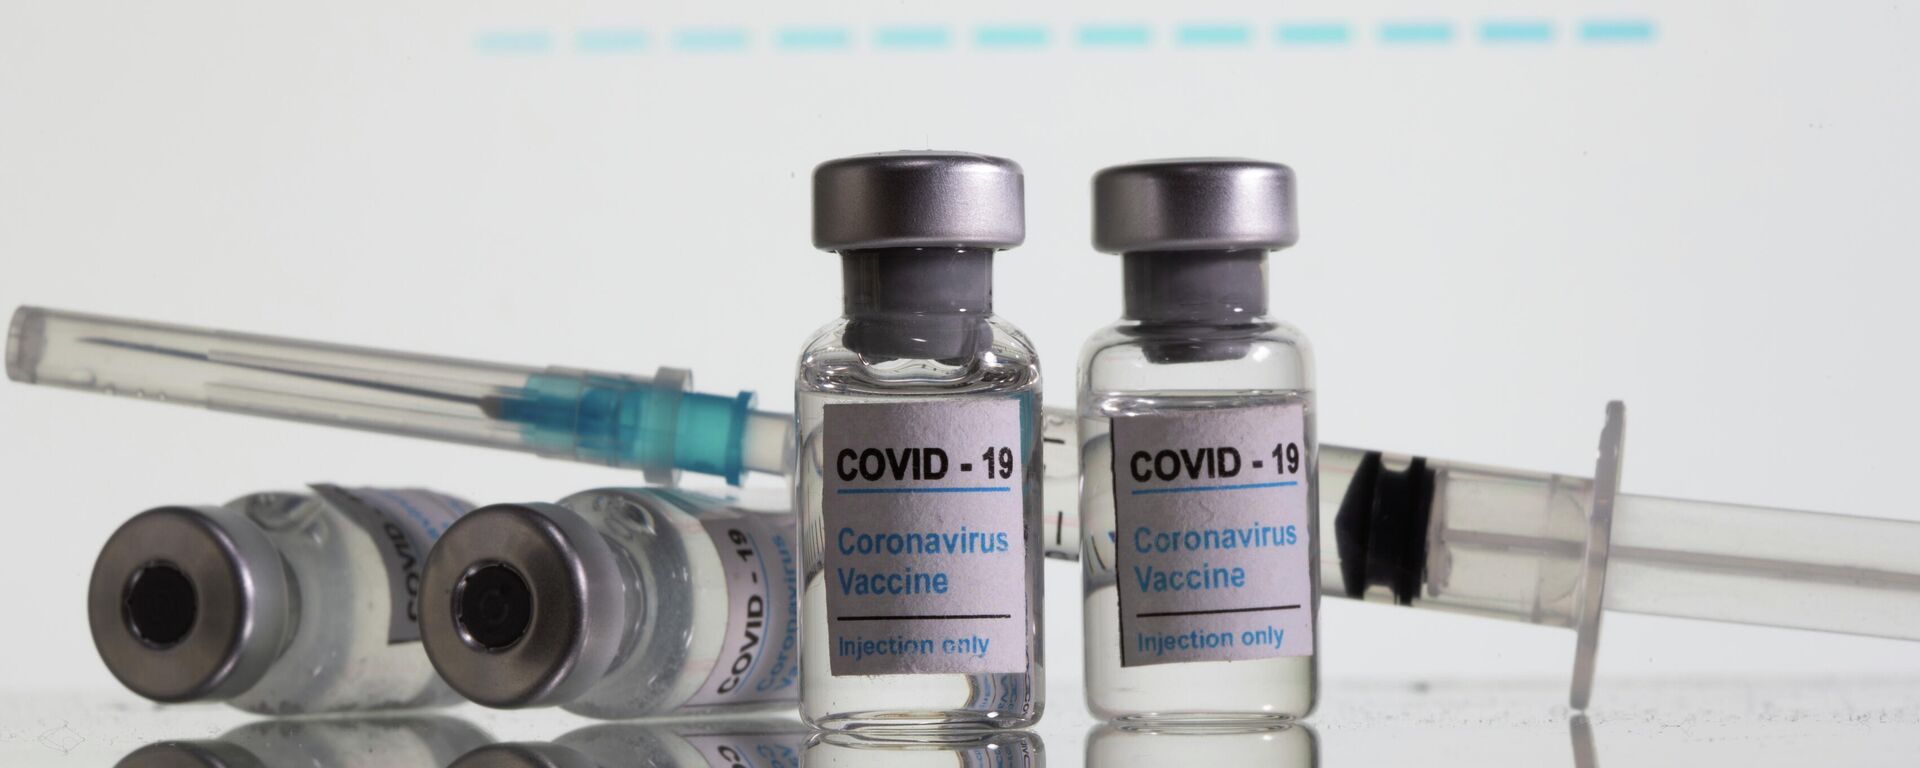 Viales de vacuna de Moderna contra el COVID-19 - Sputnik Mundo, 1920, 26.07.2021